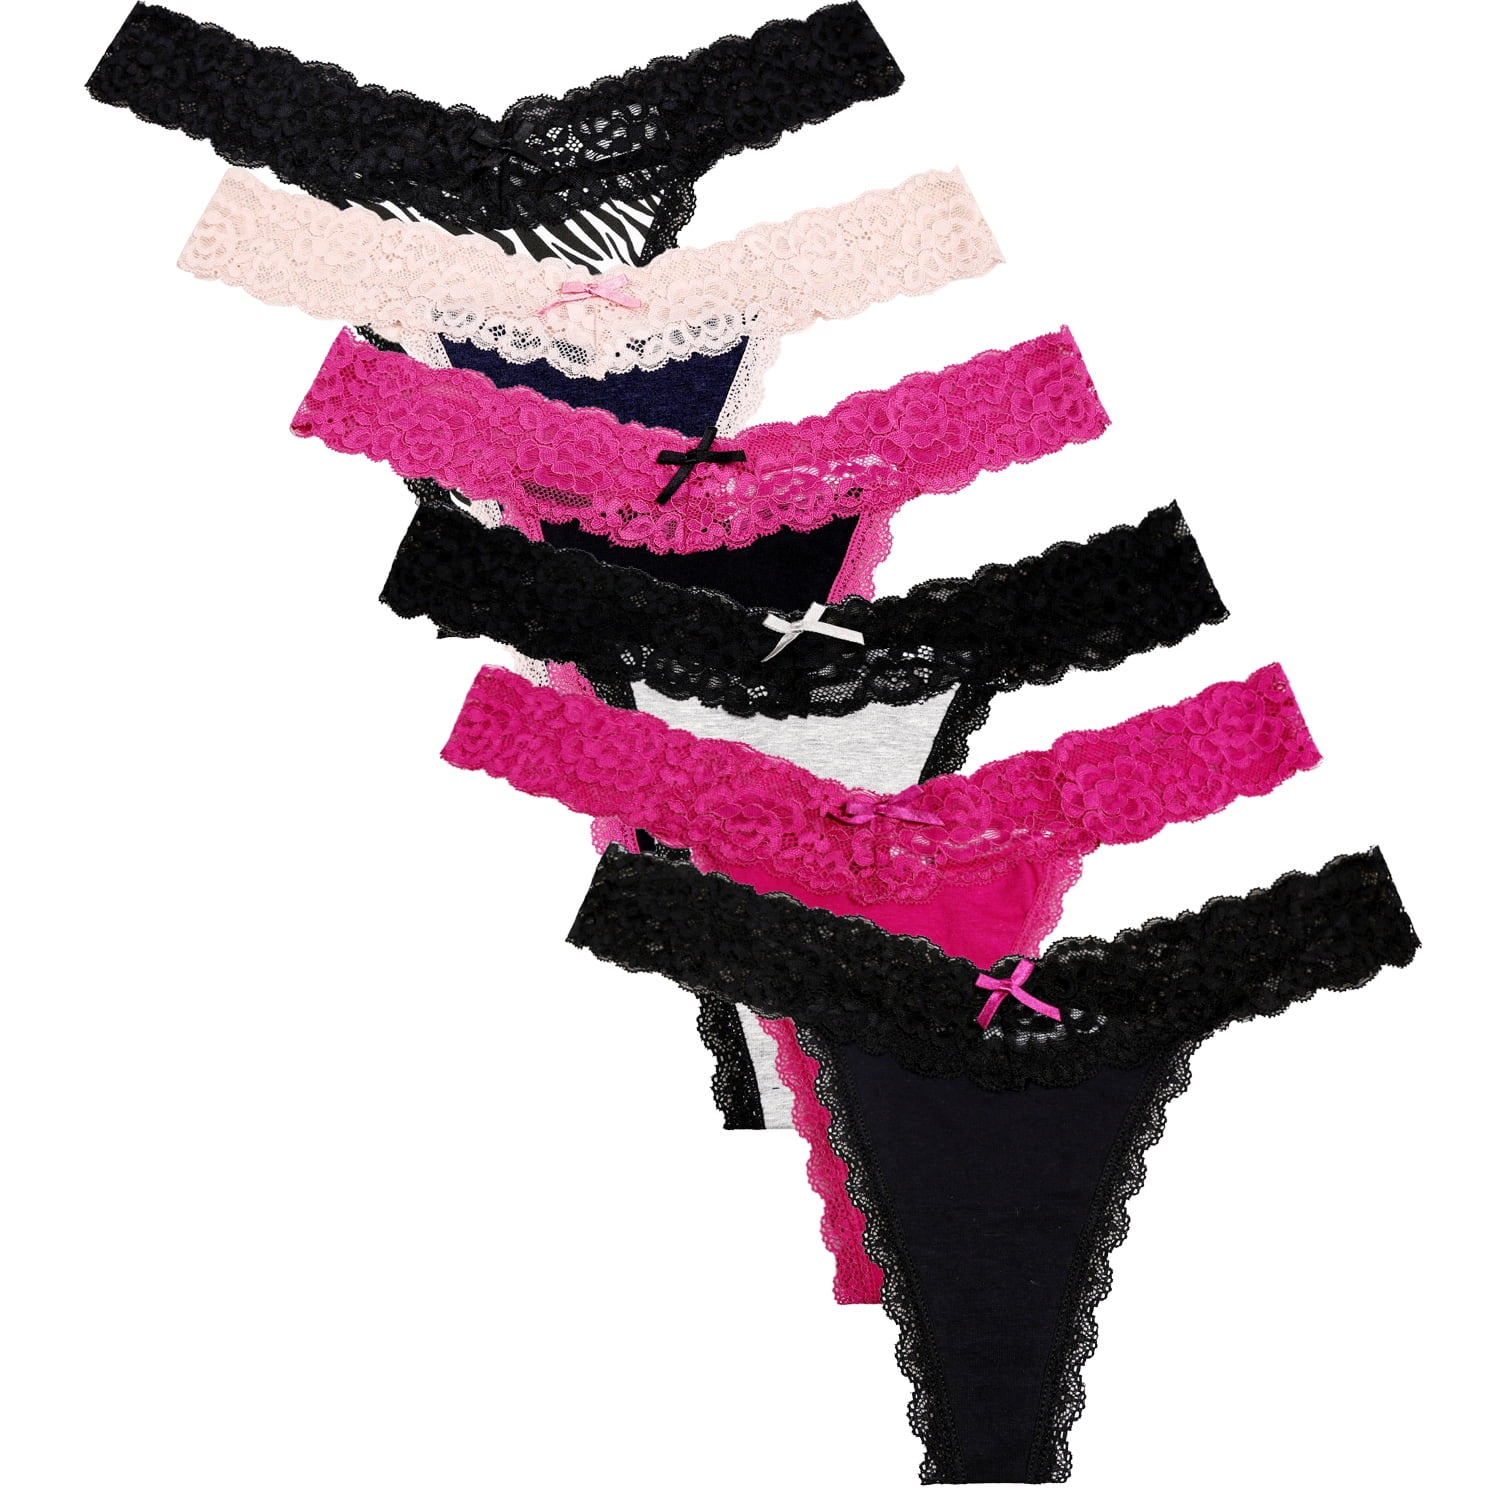 FixtureDisplays® 6PK Womens Cotton Underwear Lace Hipster Panties Briefs  Assorted Colors, Size: L. Fit for waist size: 29 21801-L 